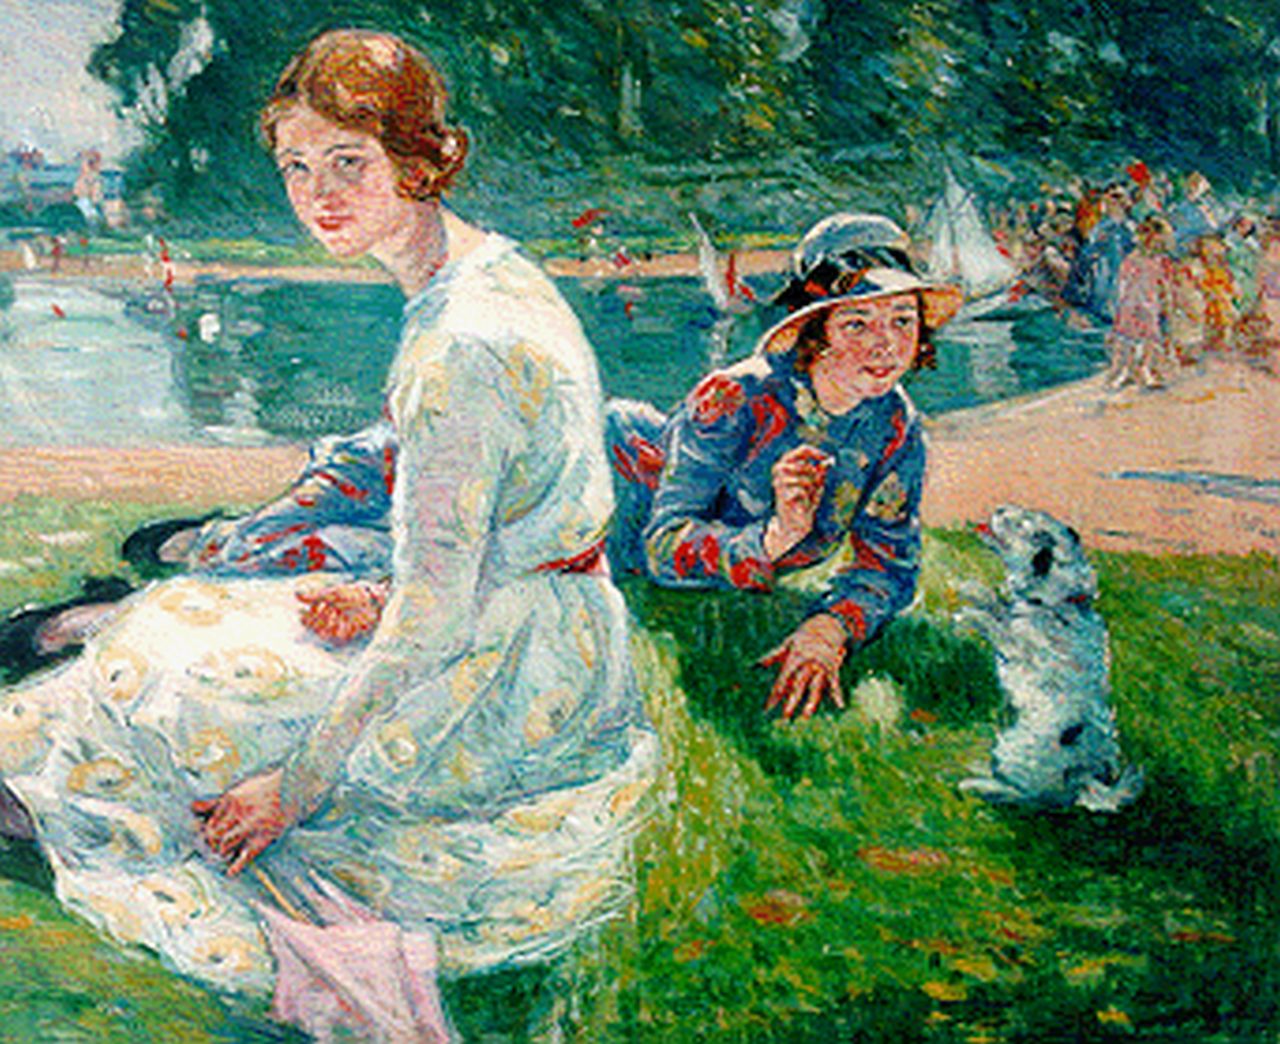 Borough Johnson E.  | Ernest Borough Johnson, Meisjes bij de vijver in Hyde Park, olieverf op doek 50,7 x 60,7 cm, gesigneerd rechtsonder